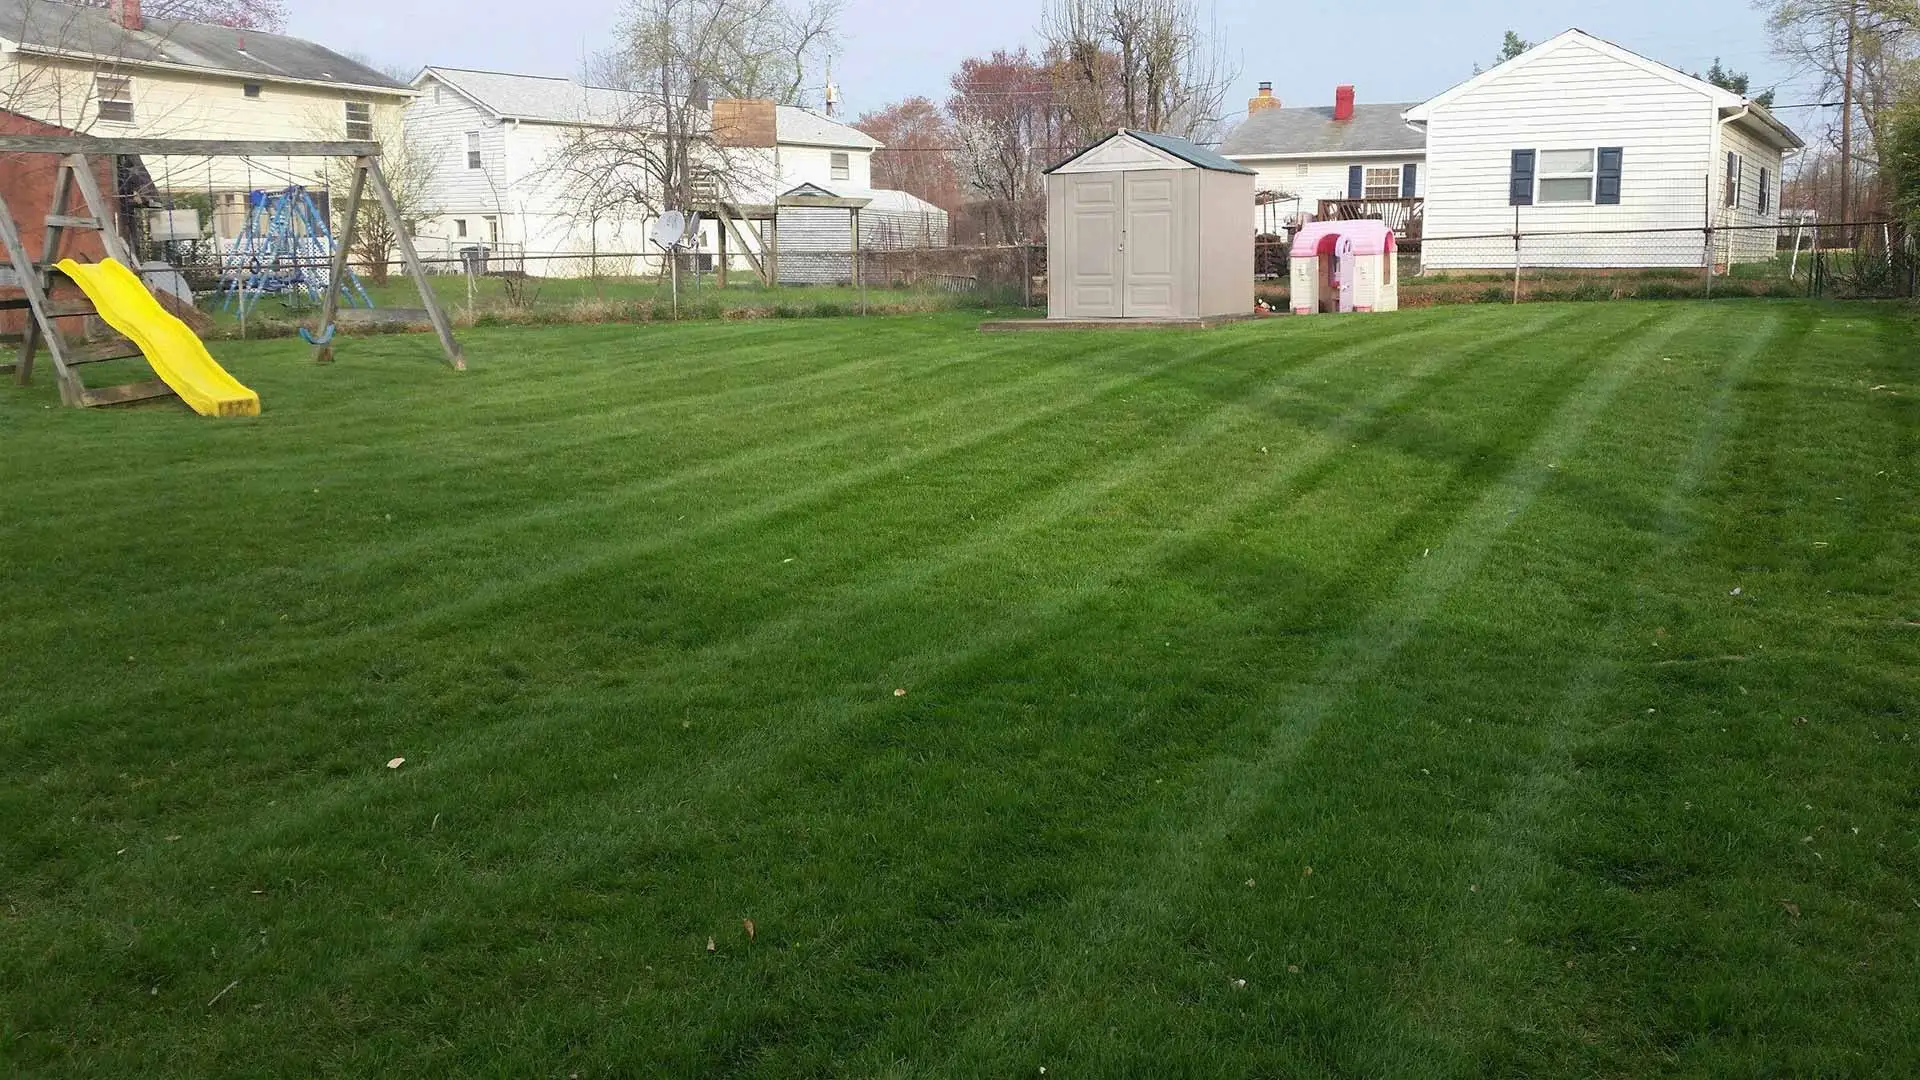 A fertilized lawn at a home in Bristow, VA.